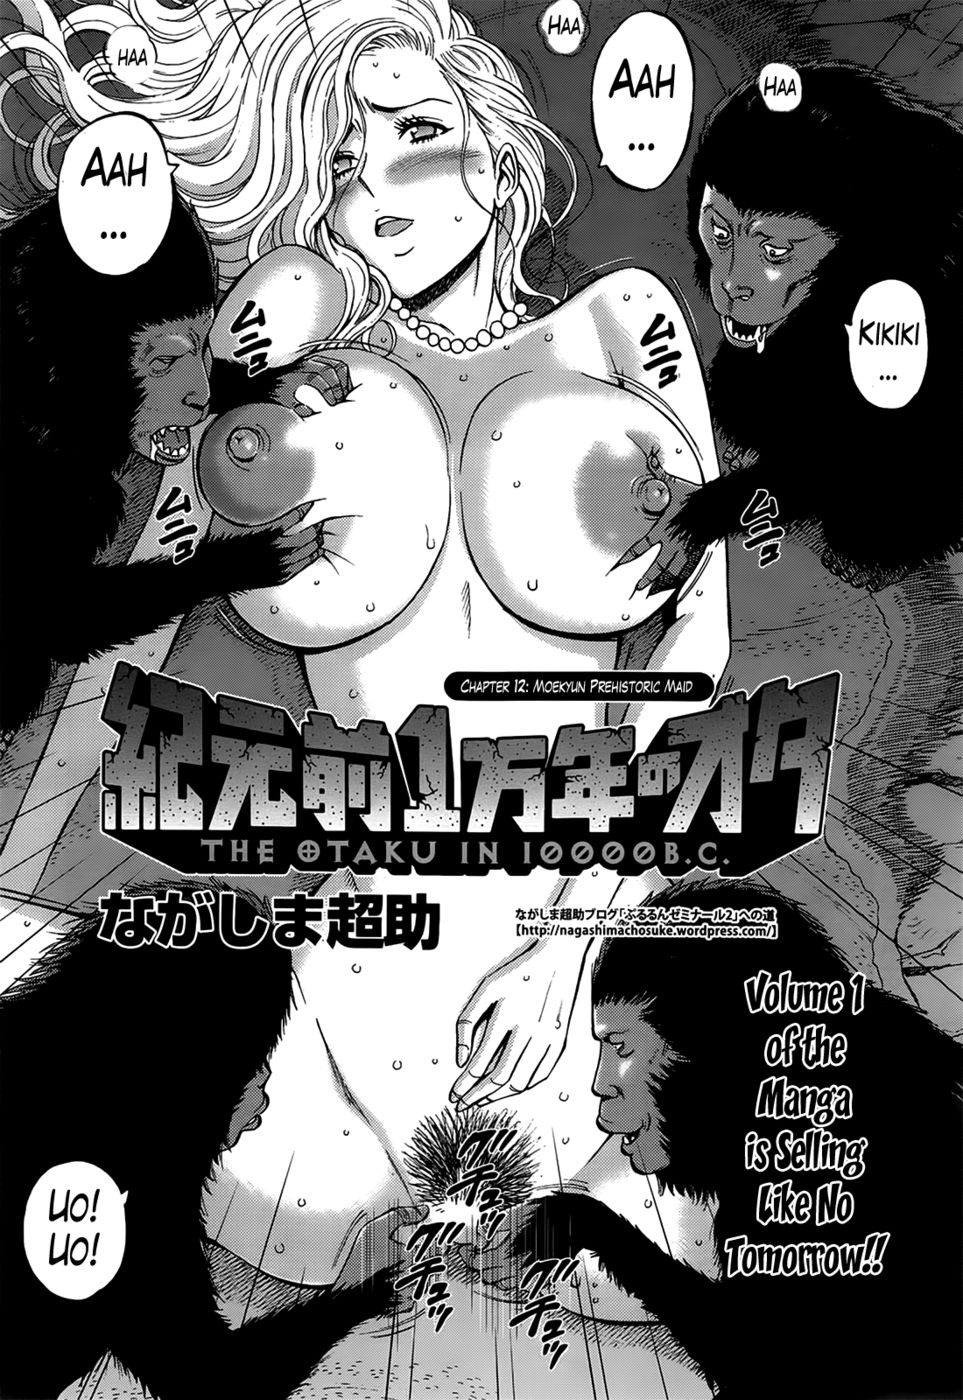 Hentai Manga Comic-The Otaku in 10,000 B.C.-Chapter 12-2